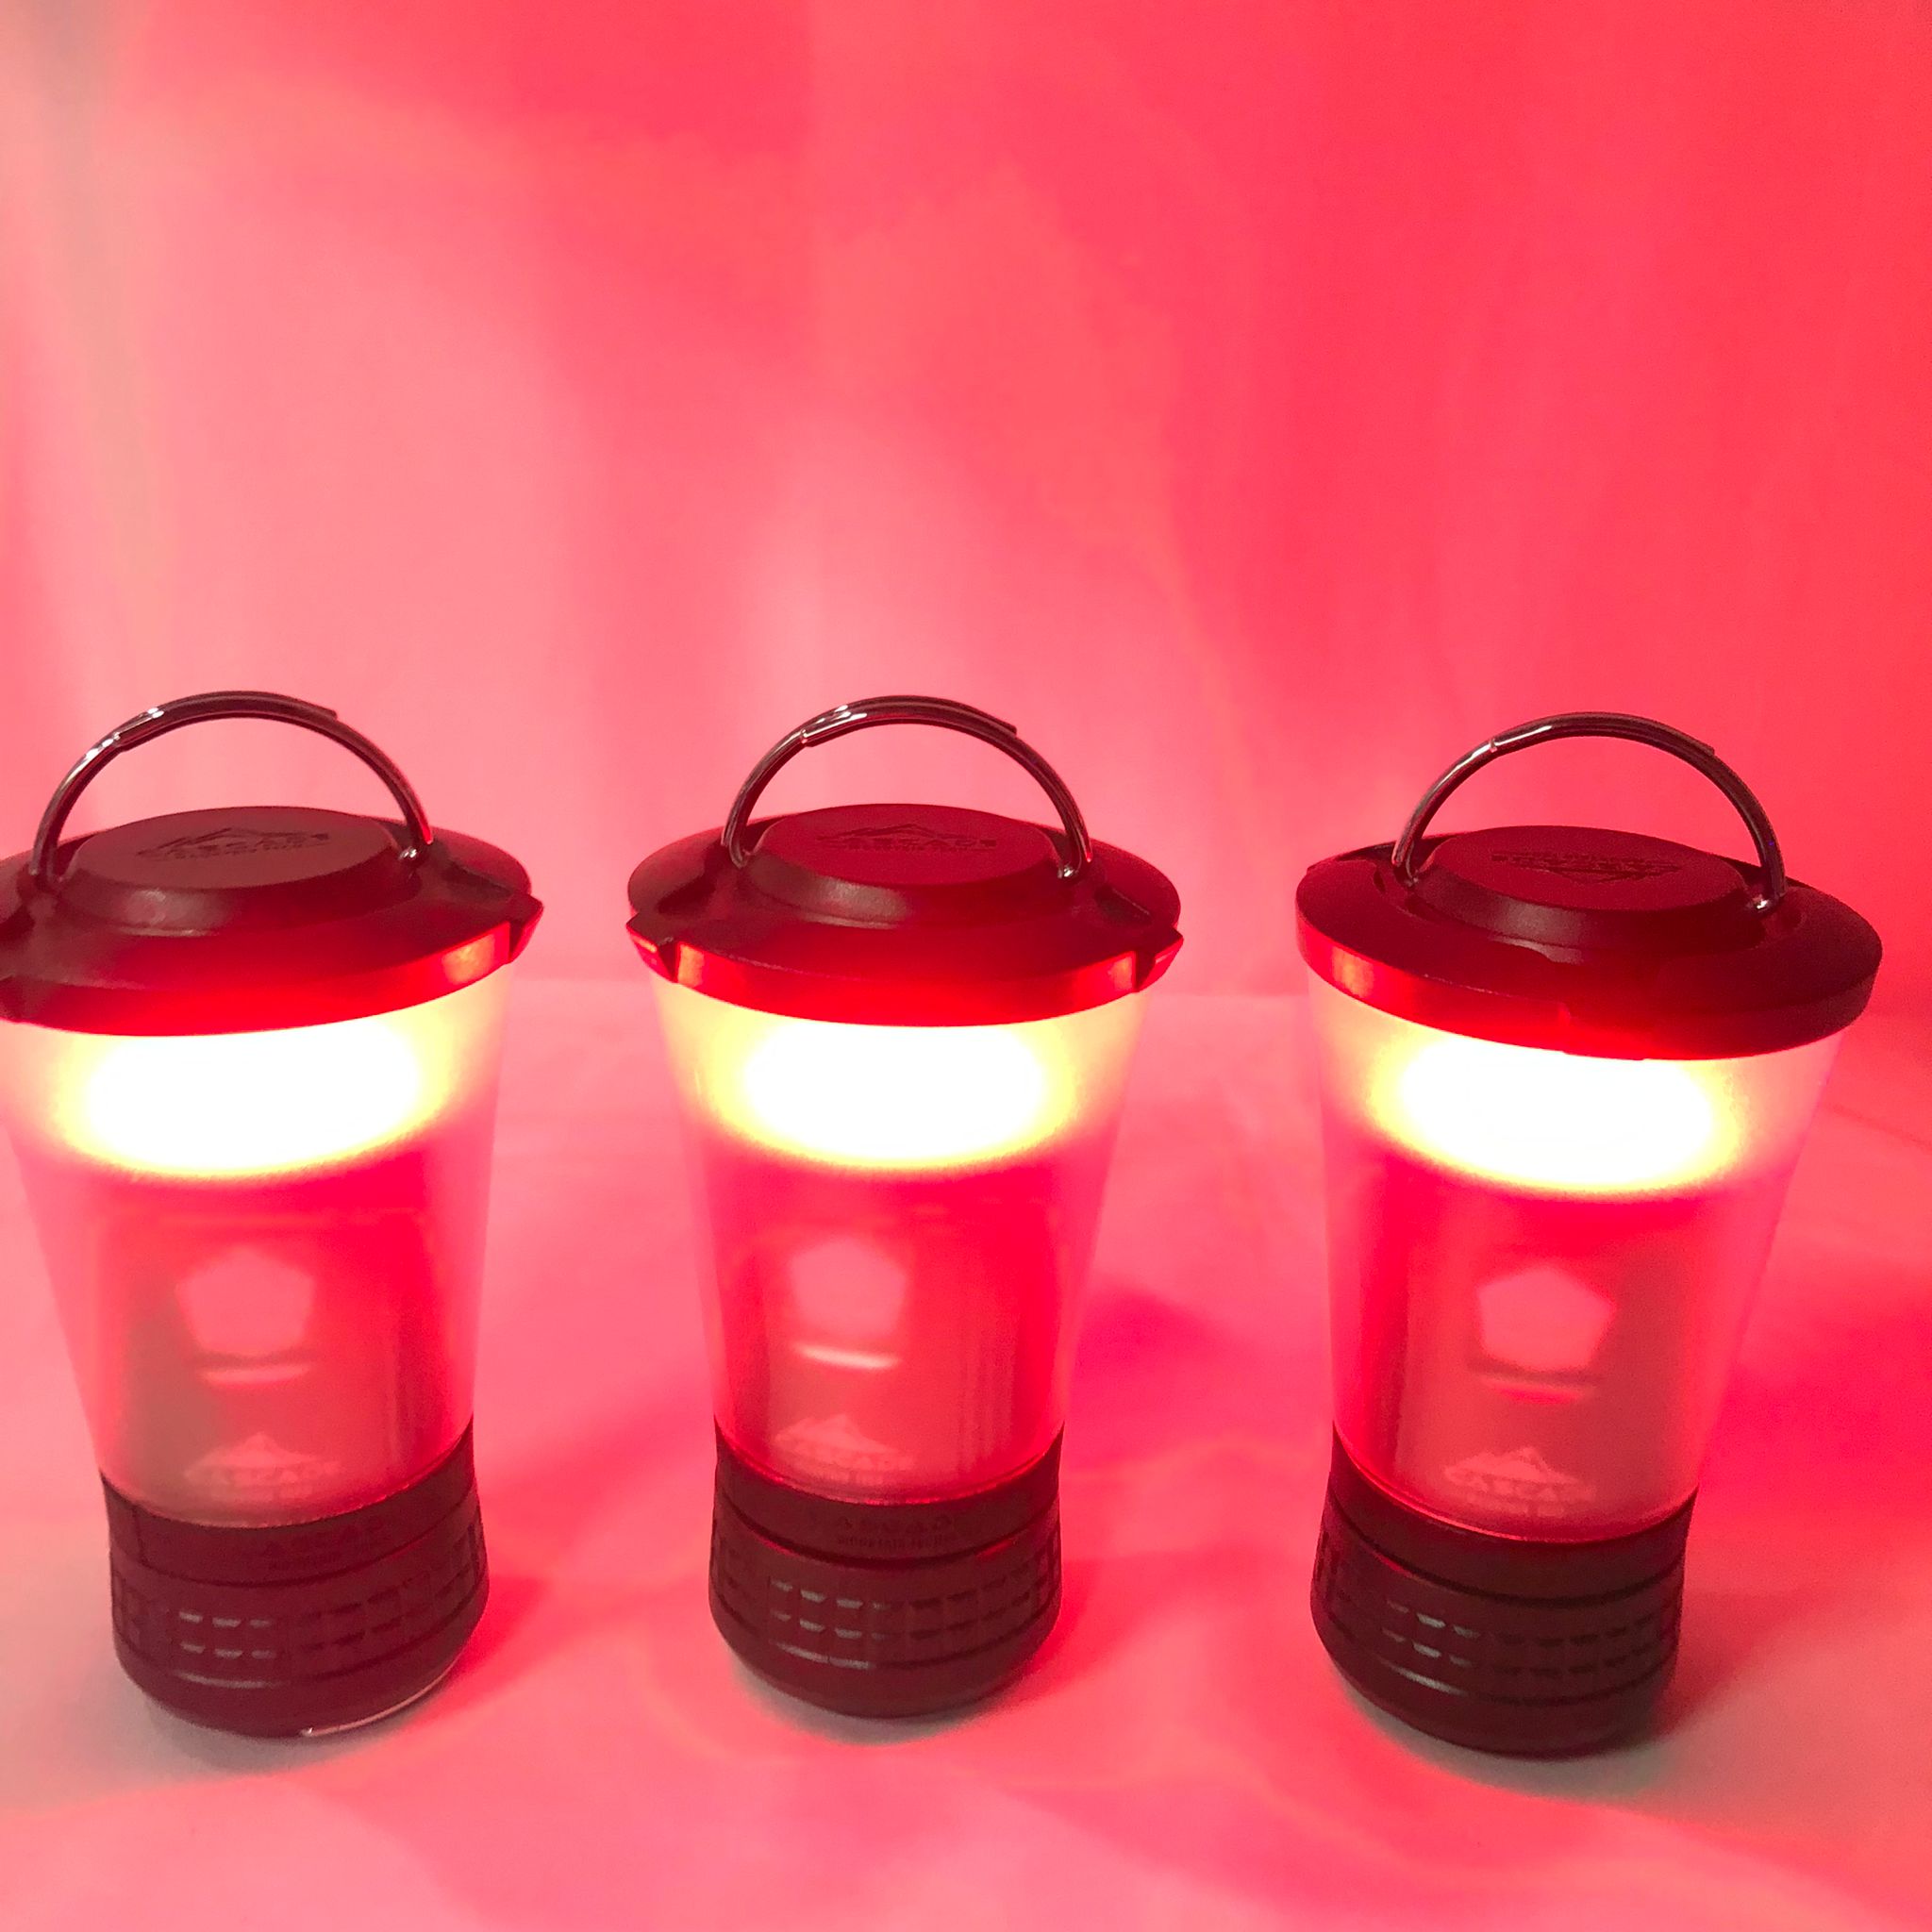 Cascade Mountain Tech 500-Lumen Ipx4 LED Flashlight Lantern - 3 Pack